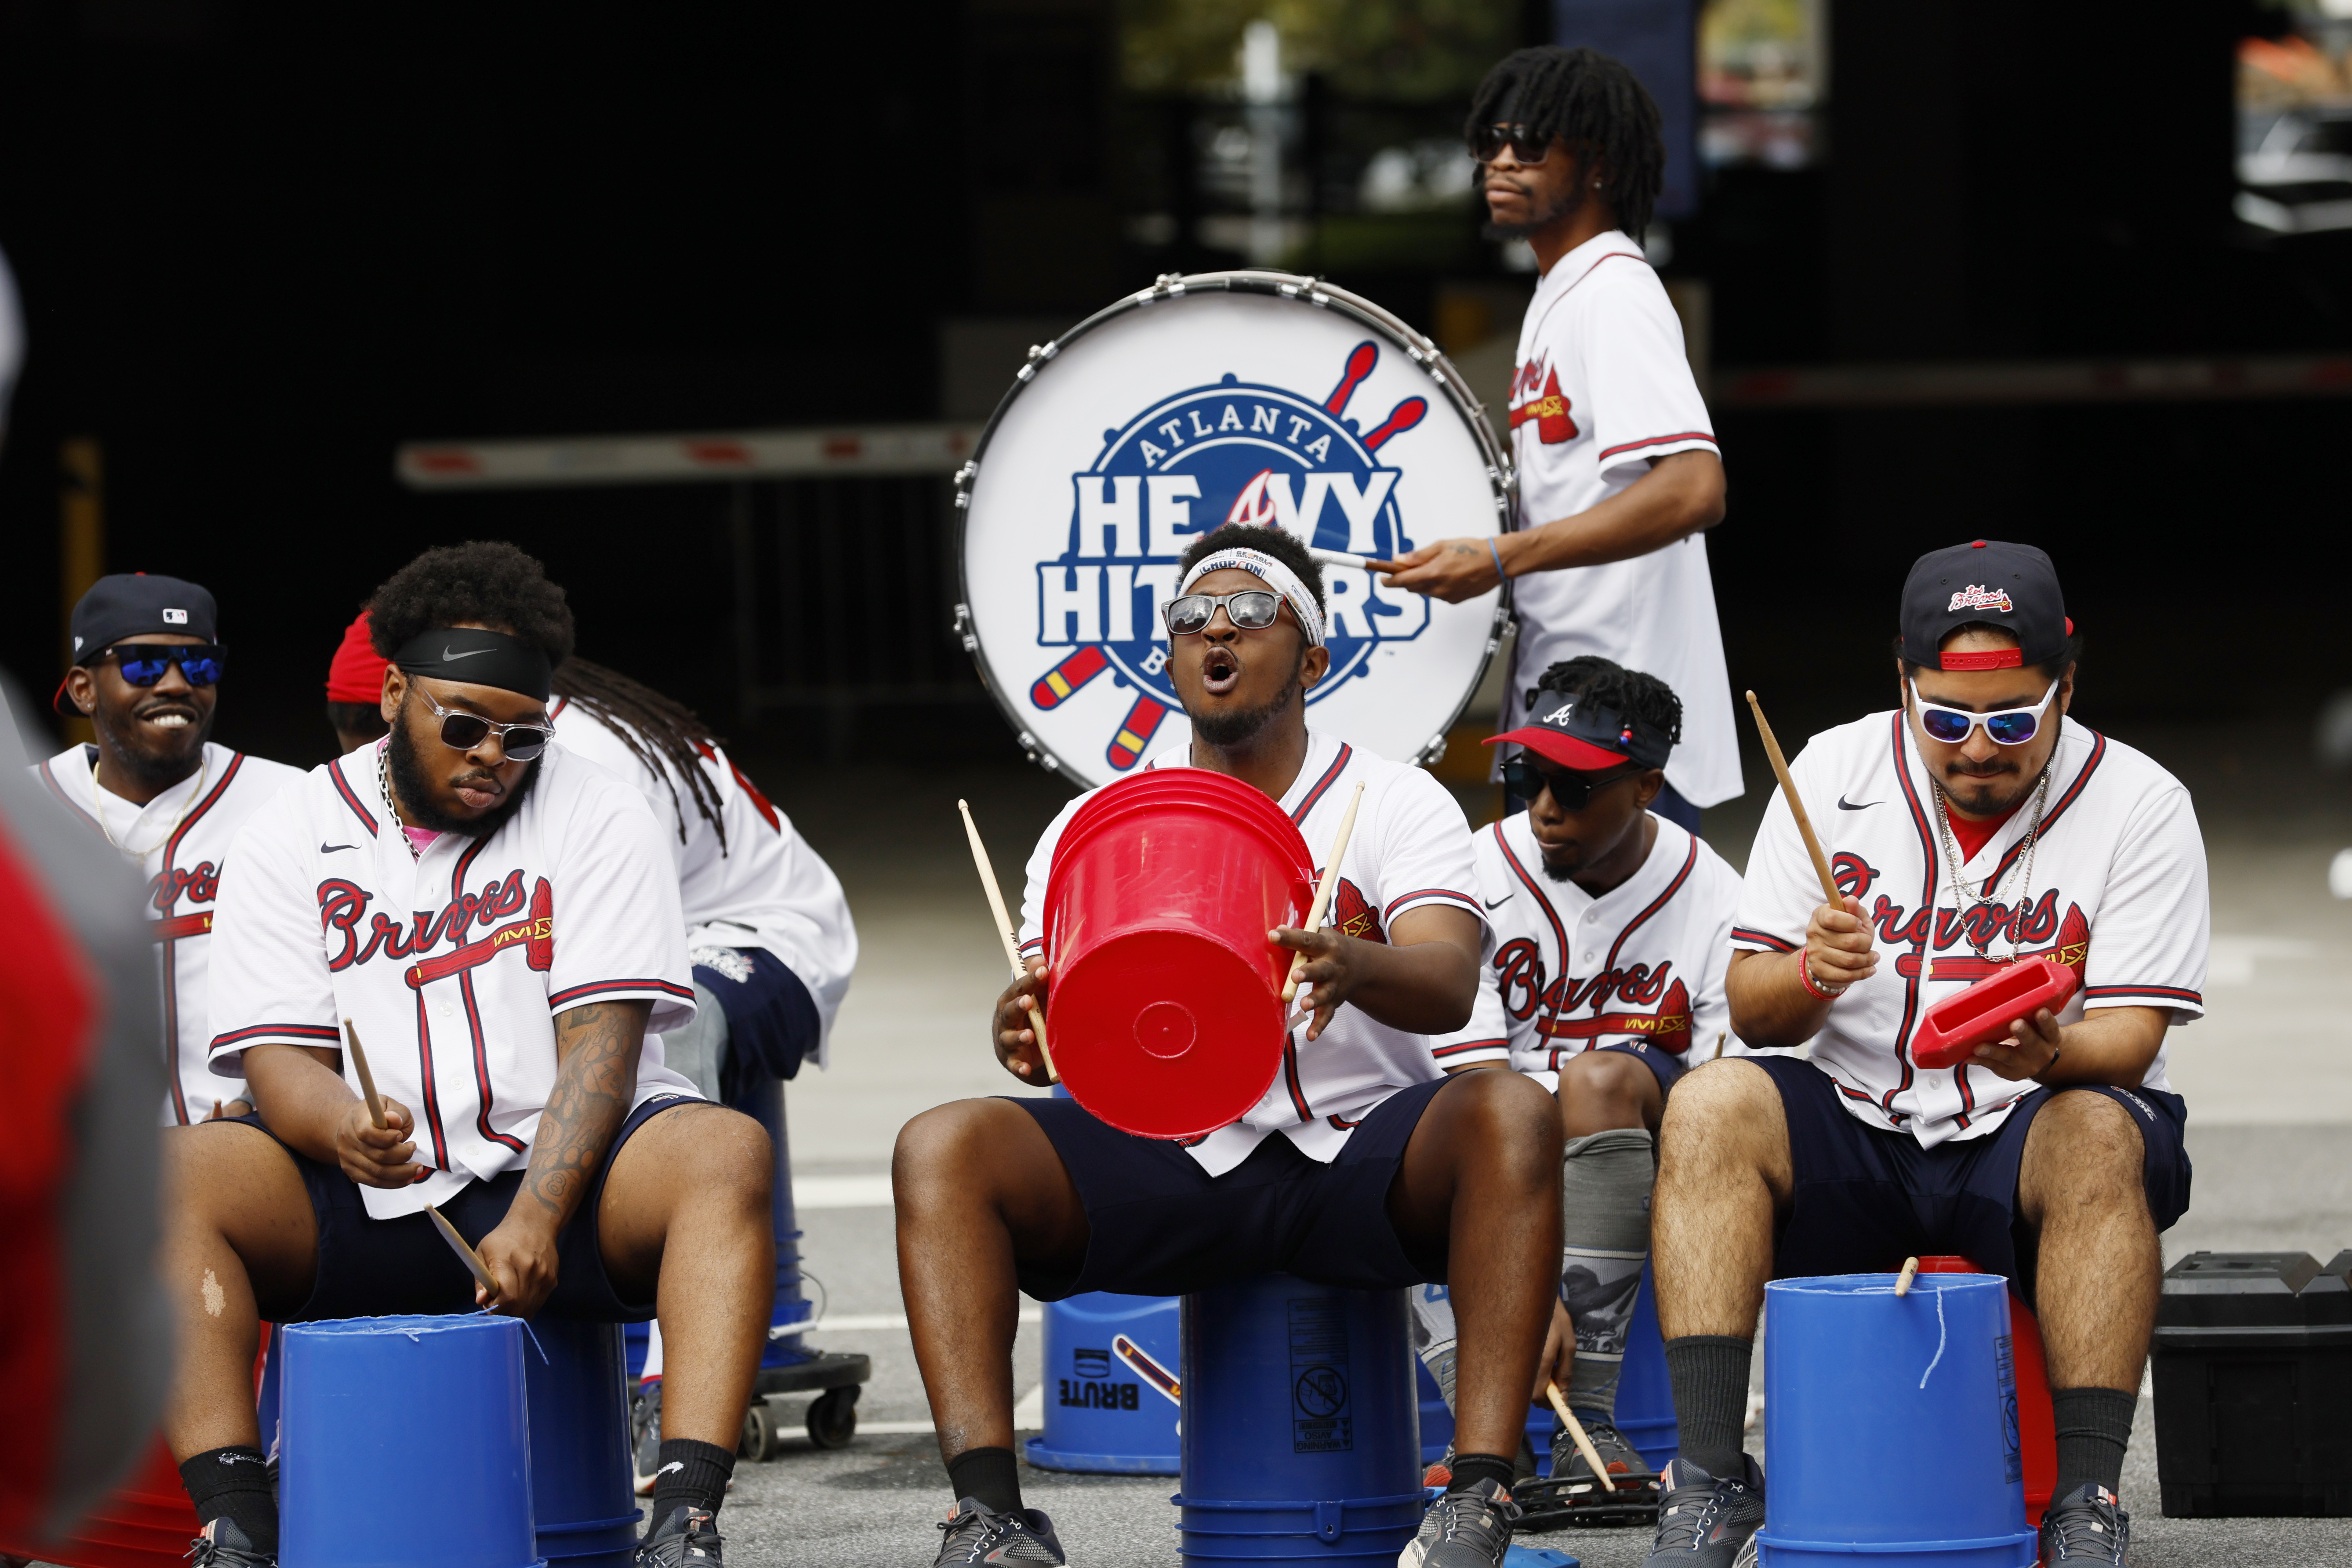 Atlanta uniform survey: The Braves, the Bulldogs and then everyone